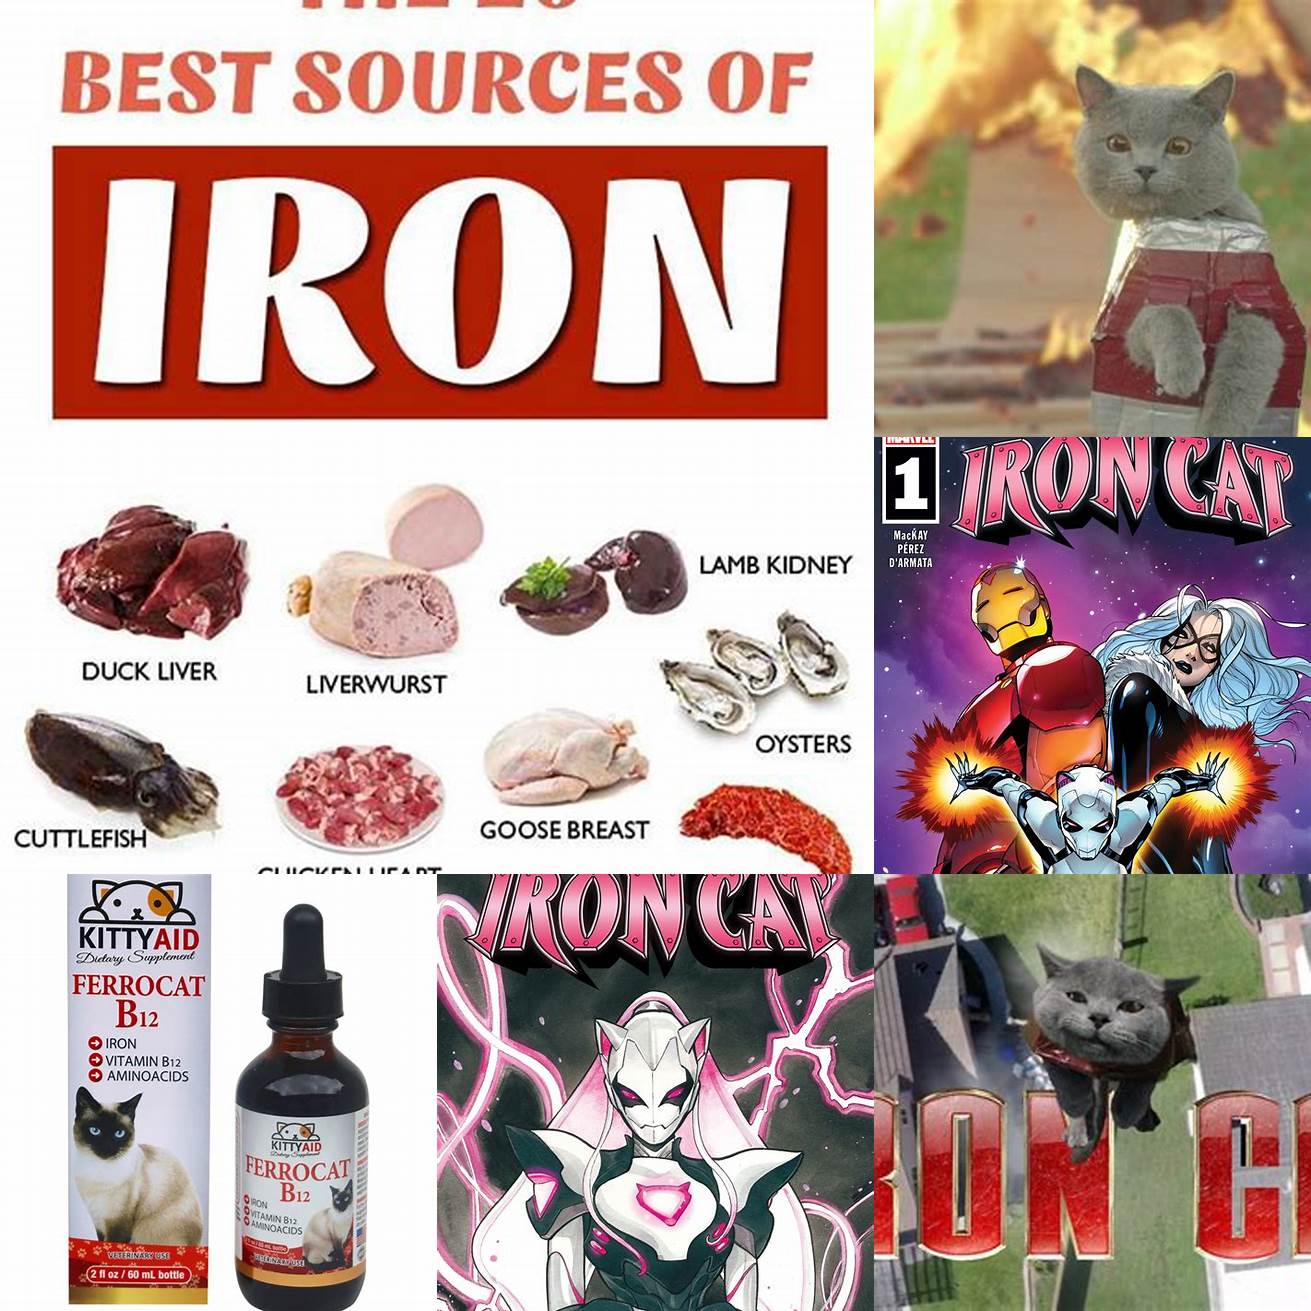 Good source of iron